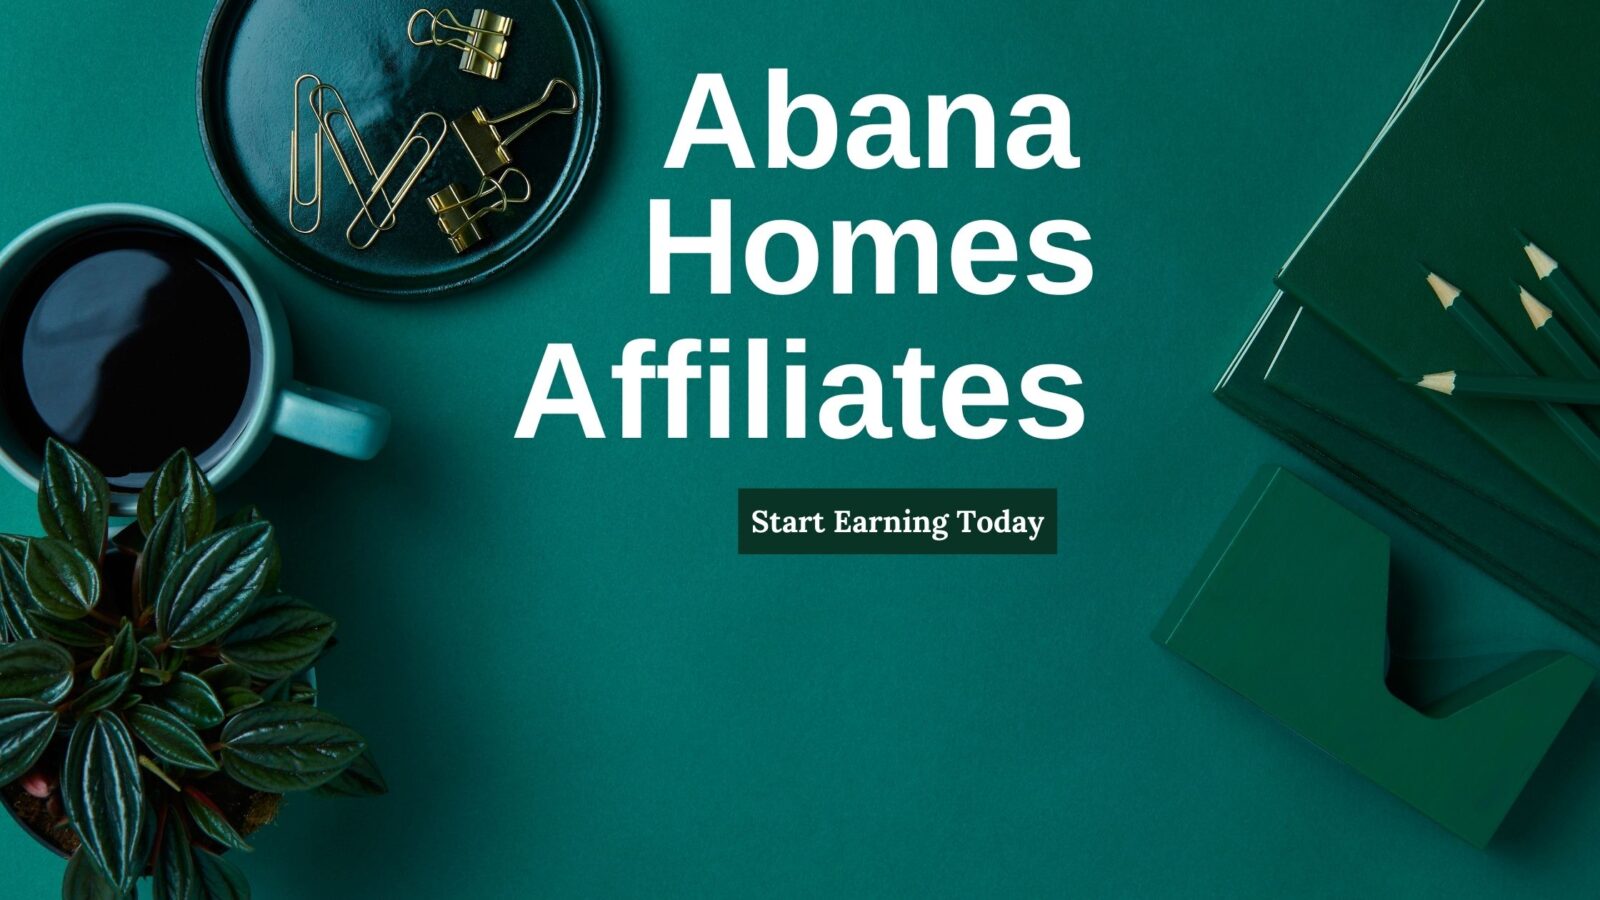 Affiliate Network Abana Homes